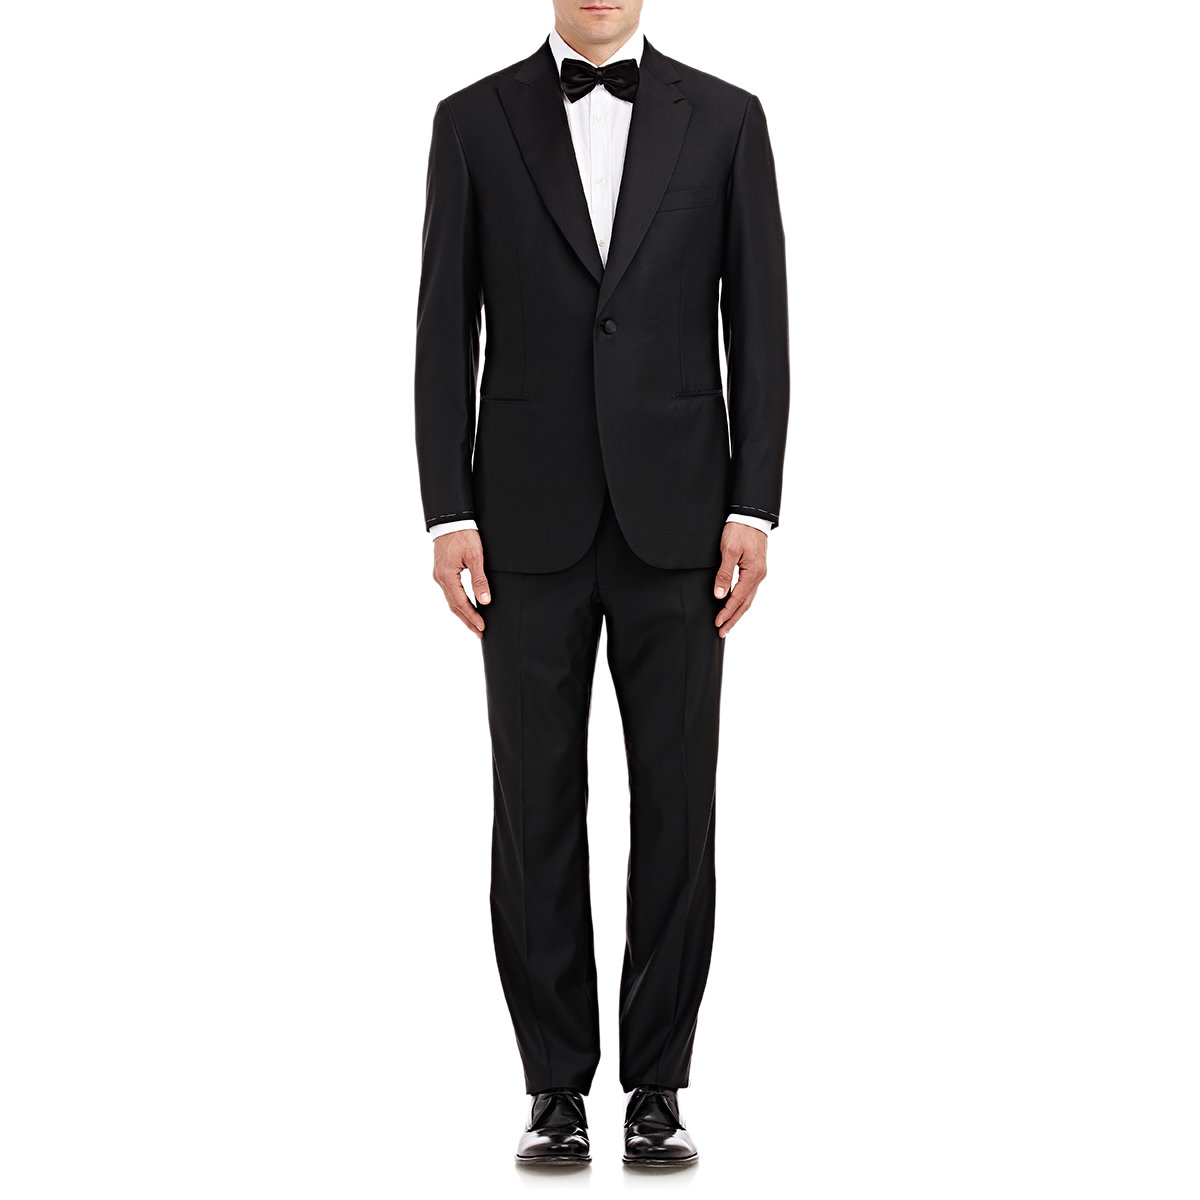 Lyst - Brioni Men's Flaiano Tuxedo Suit in Black for Men